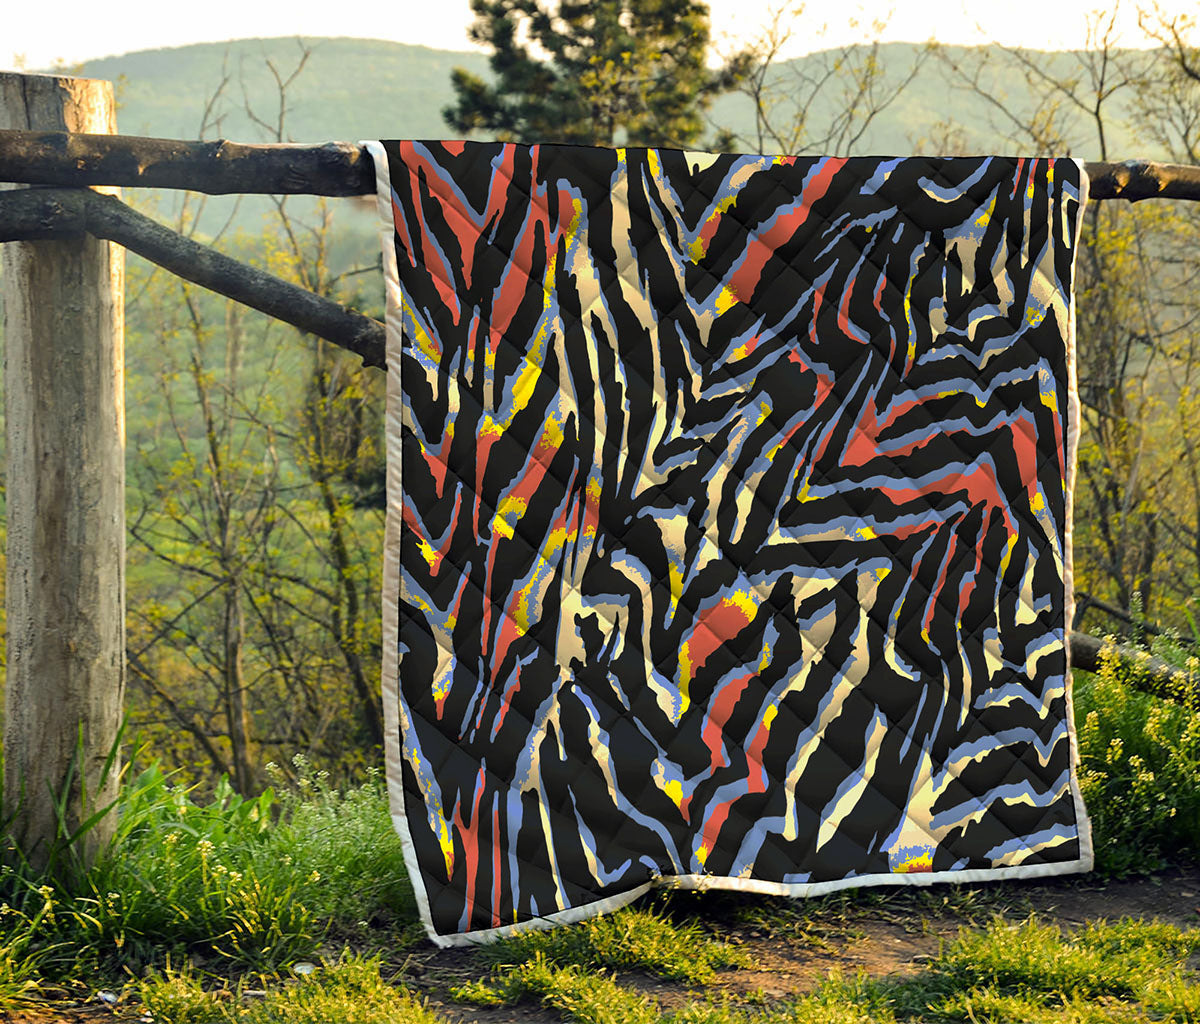 Abstract Zebra Pattern Print Quilt